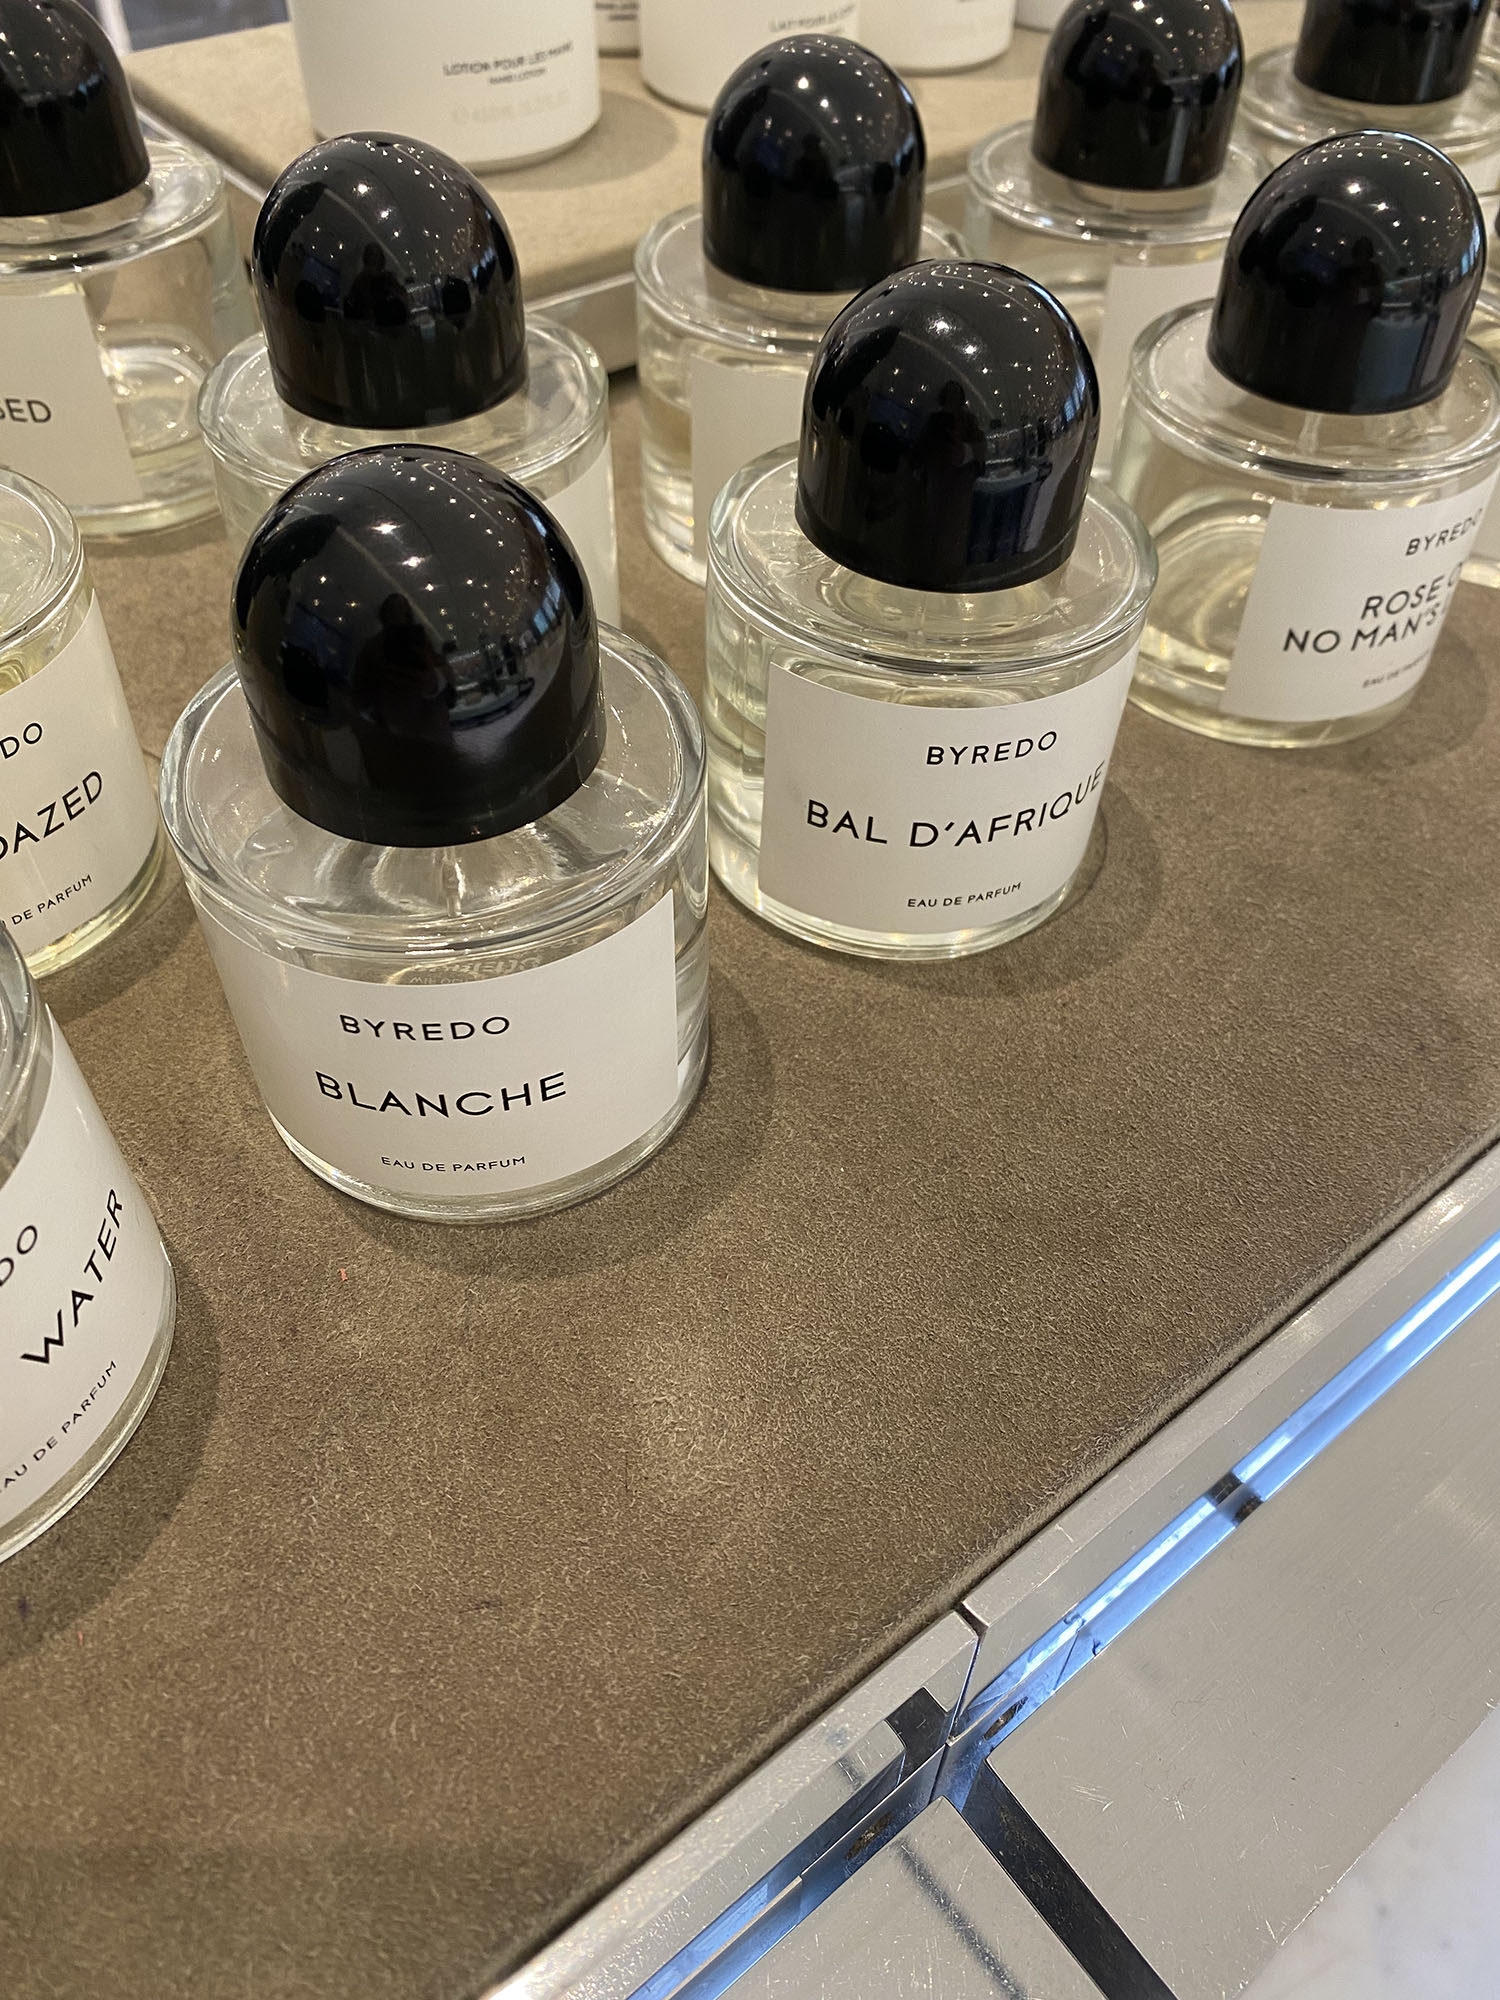 Coco & Vera - Byredo perfume bottles at a department store in Dublin, Ireland